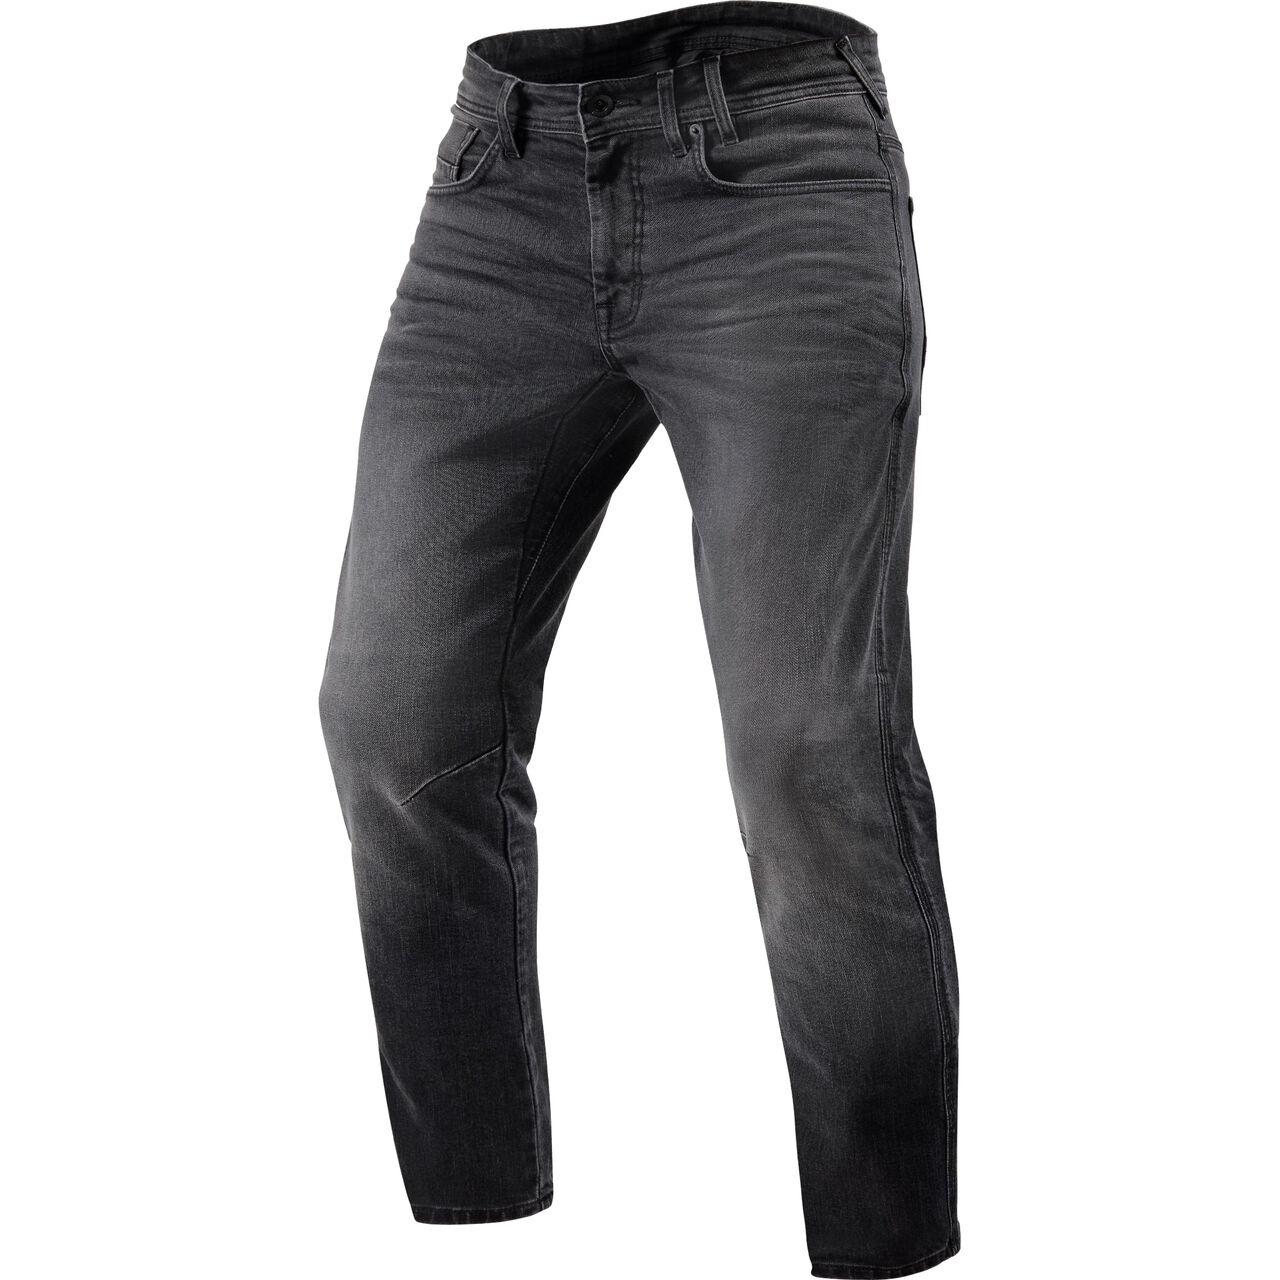 Detroit 2 TF Jeans dark grey 30/34